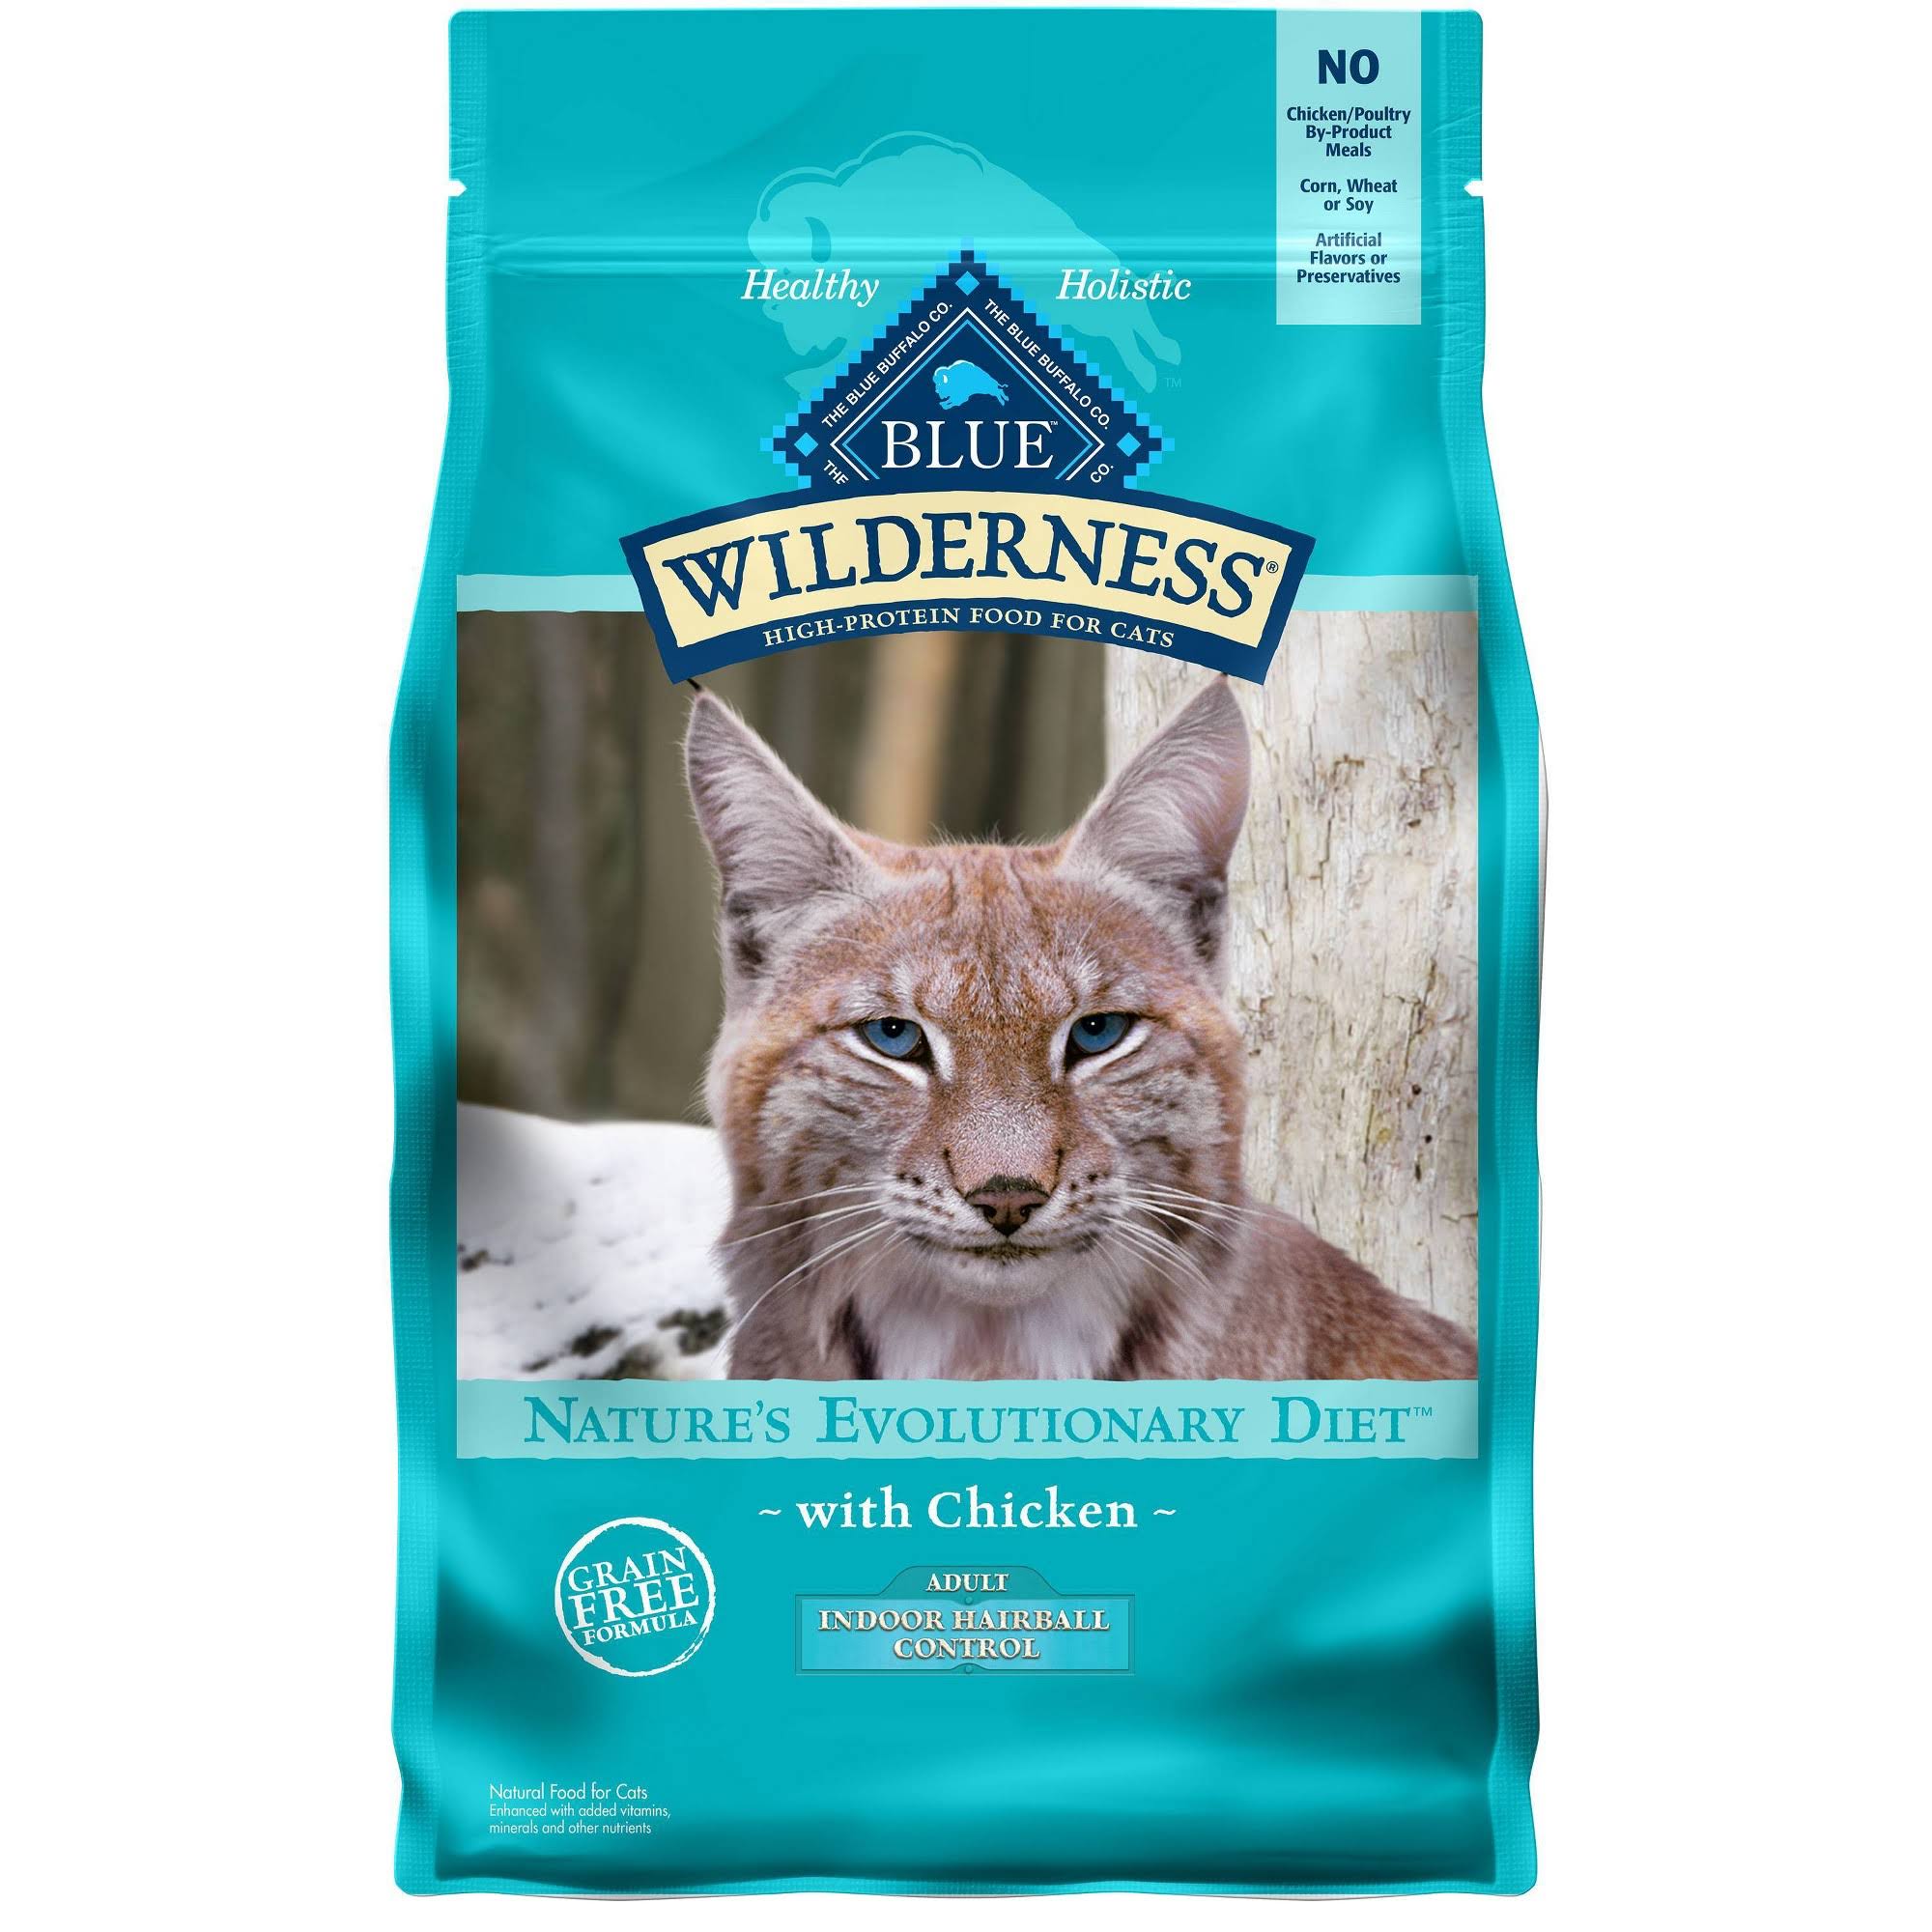 Blue Buffalo Wilderness Cat Food - Chicken Formula